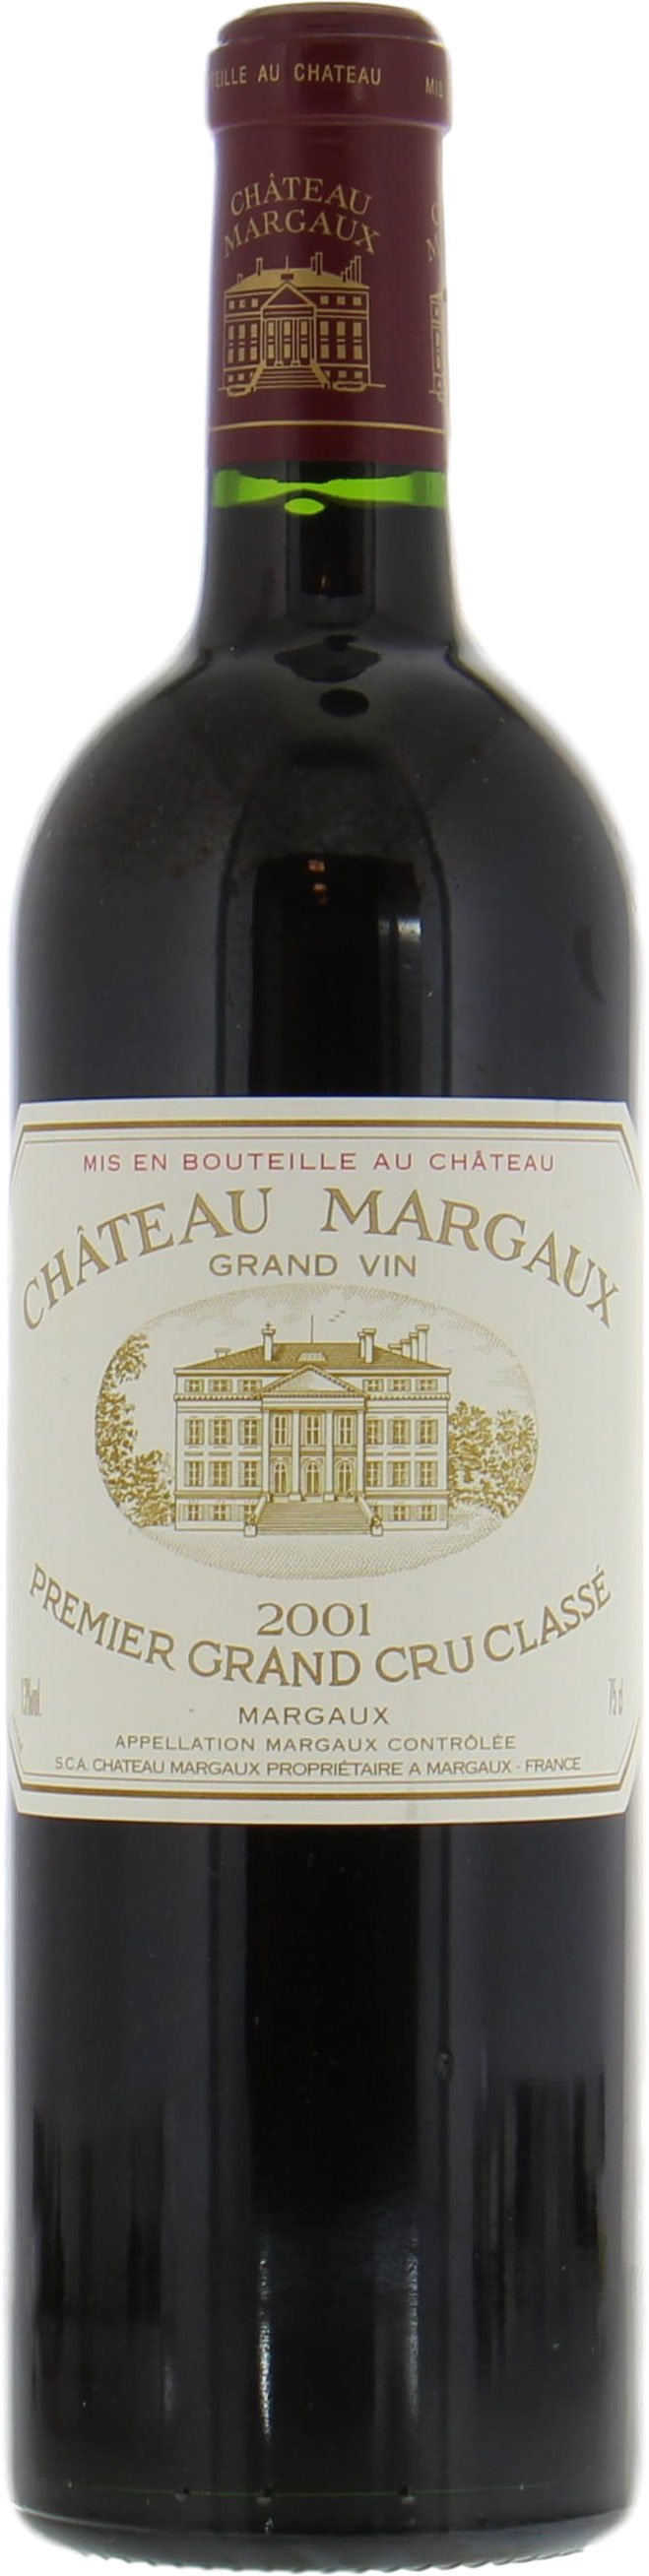 Chateau Margaux - Chateau Margaux 2001 Perfect